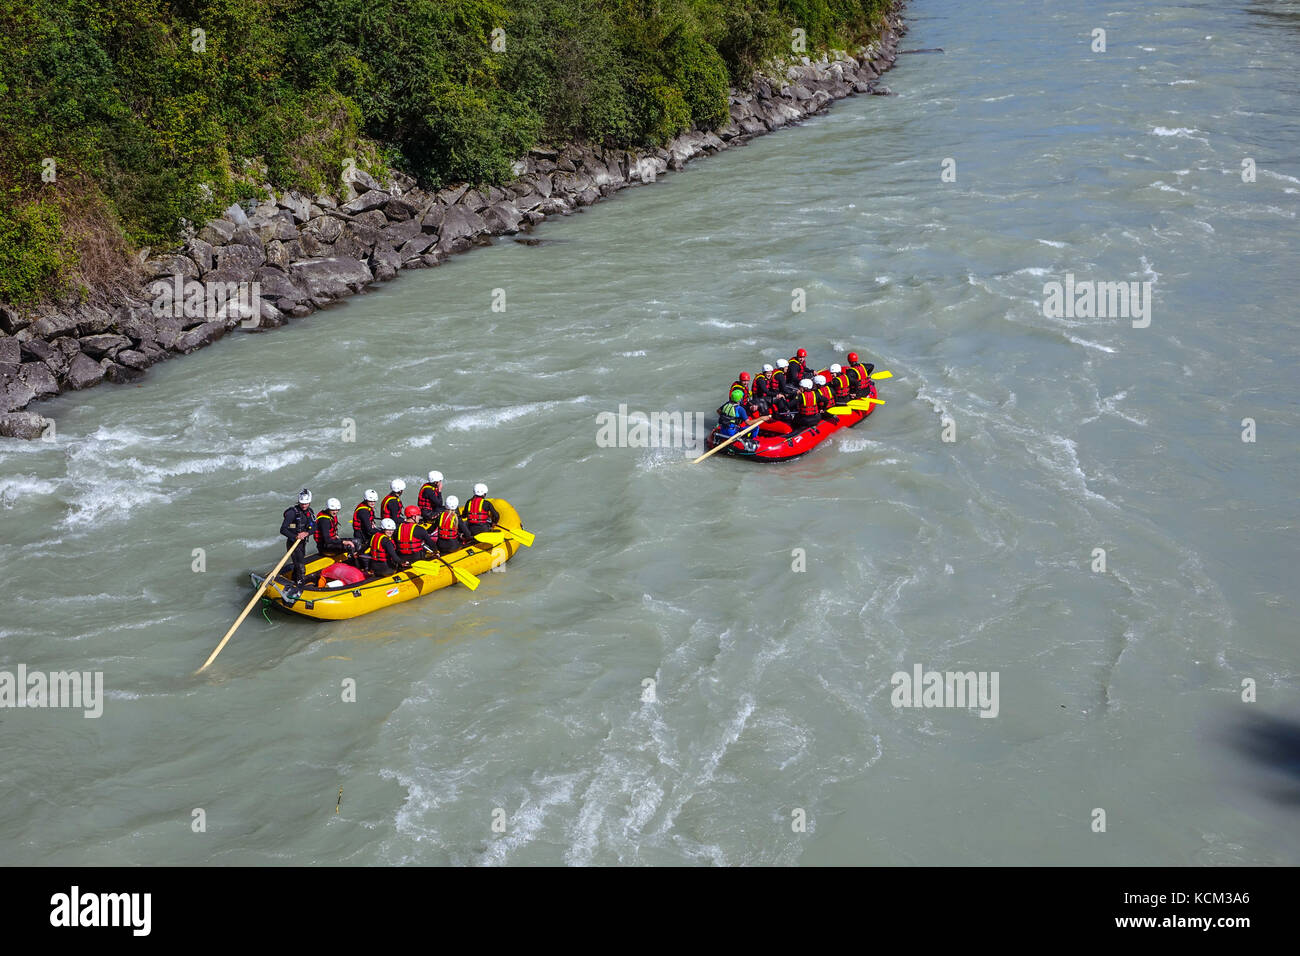 Rafting on the River Inn near Imst, Austria Stock Photo